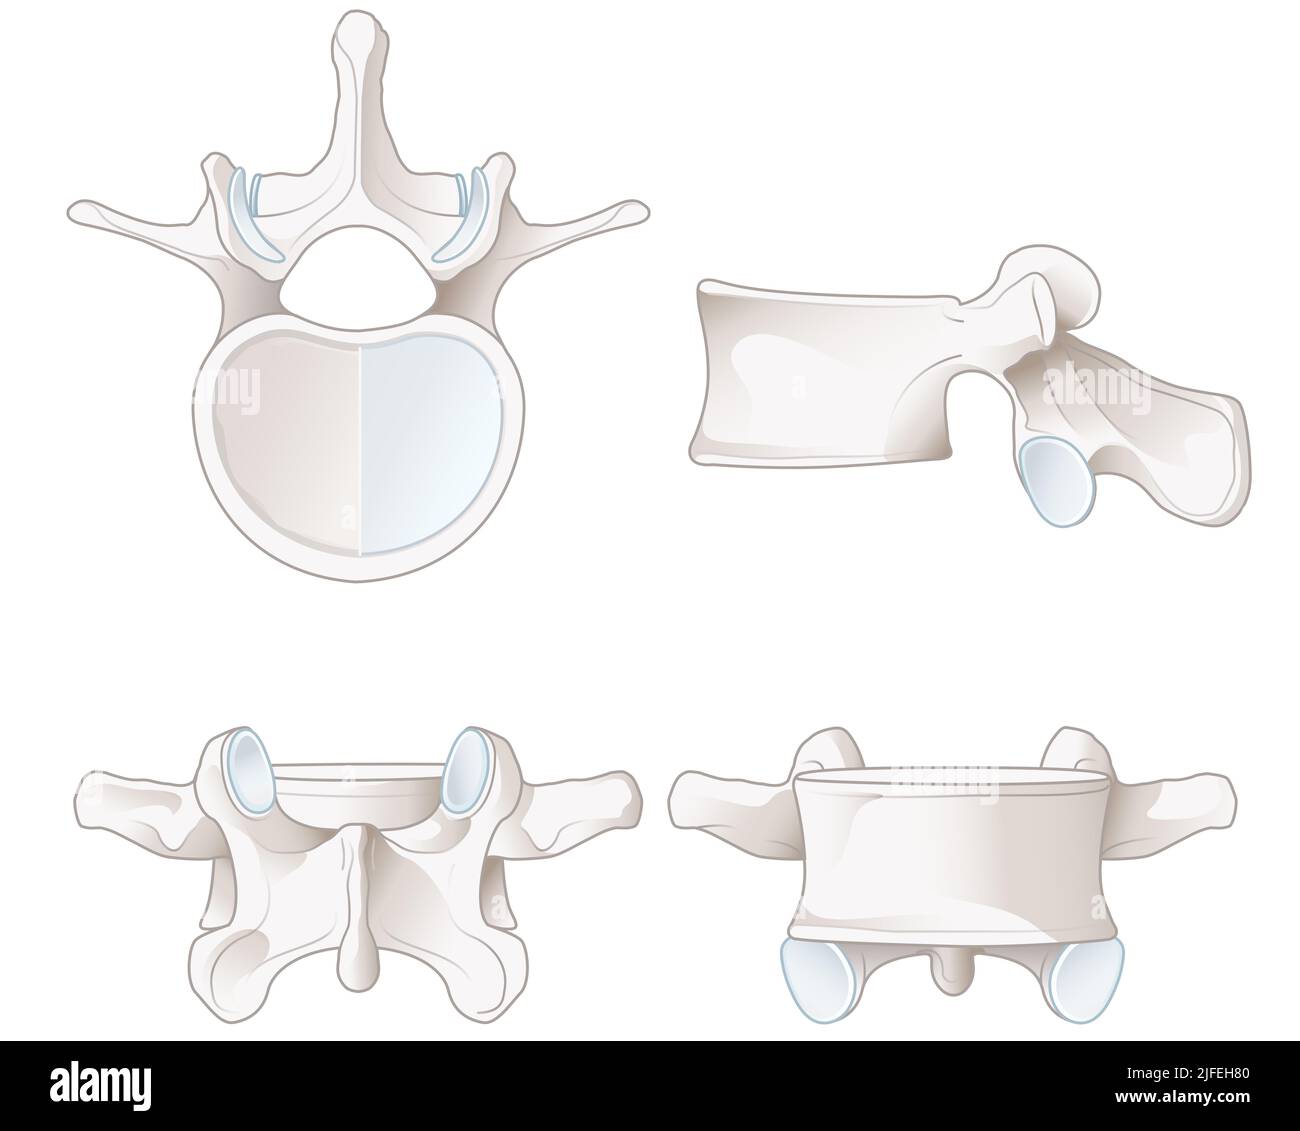 Illustration showing healthy lumbar vertebrae. Different views. Labeled illustration Stock Photo